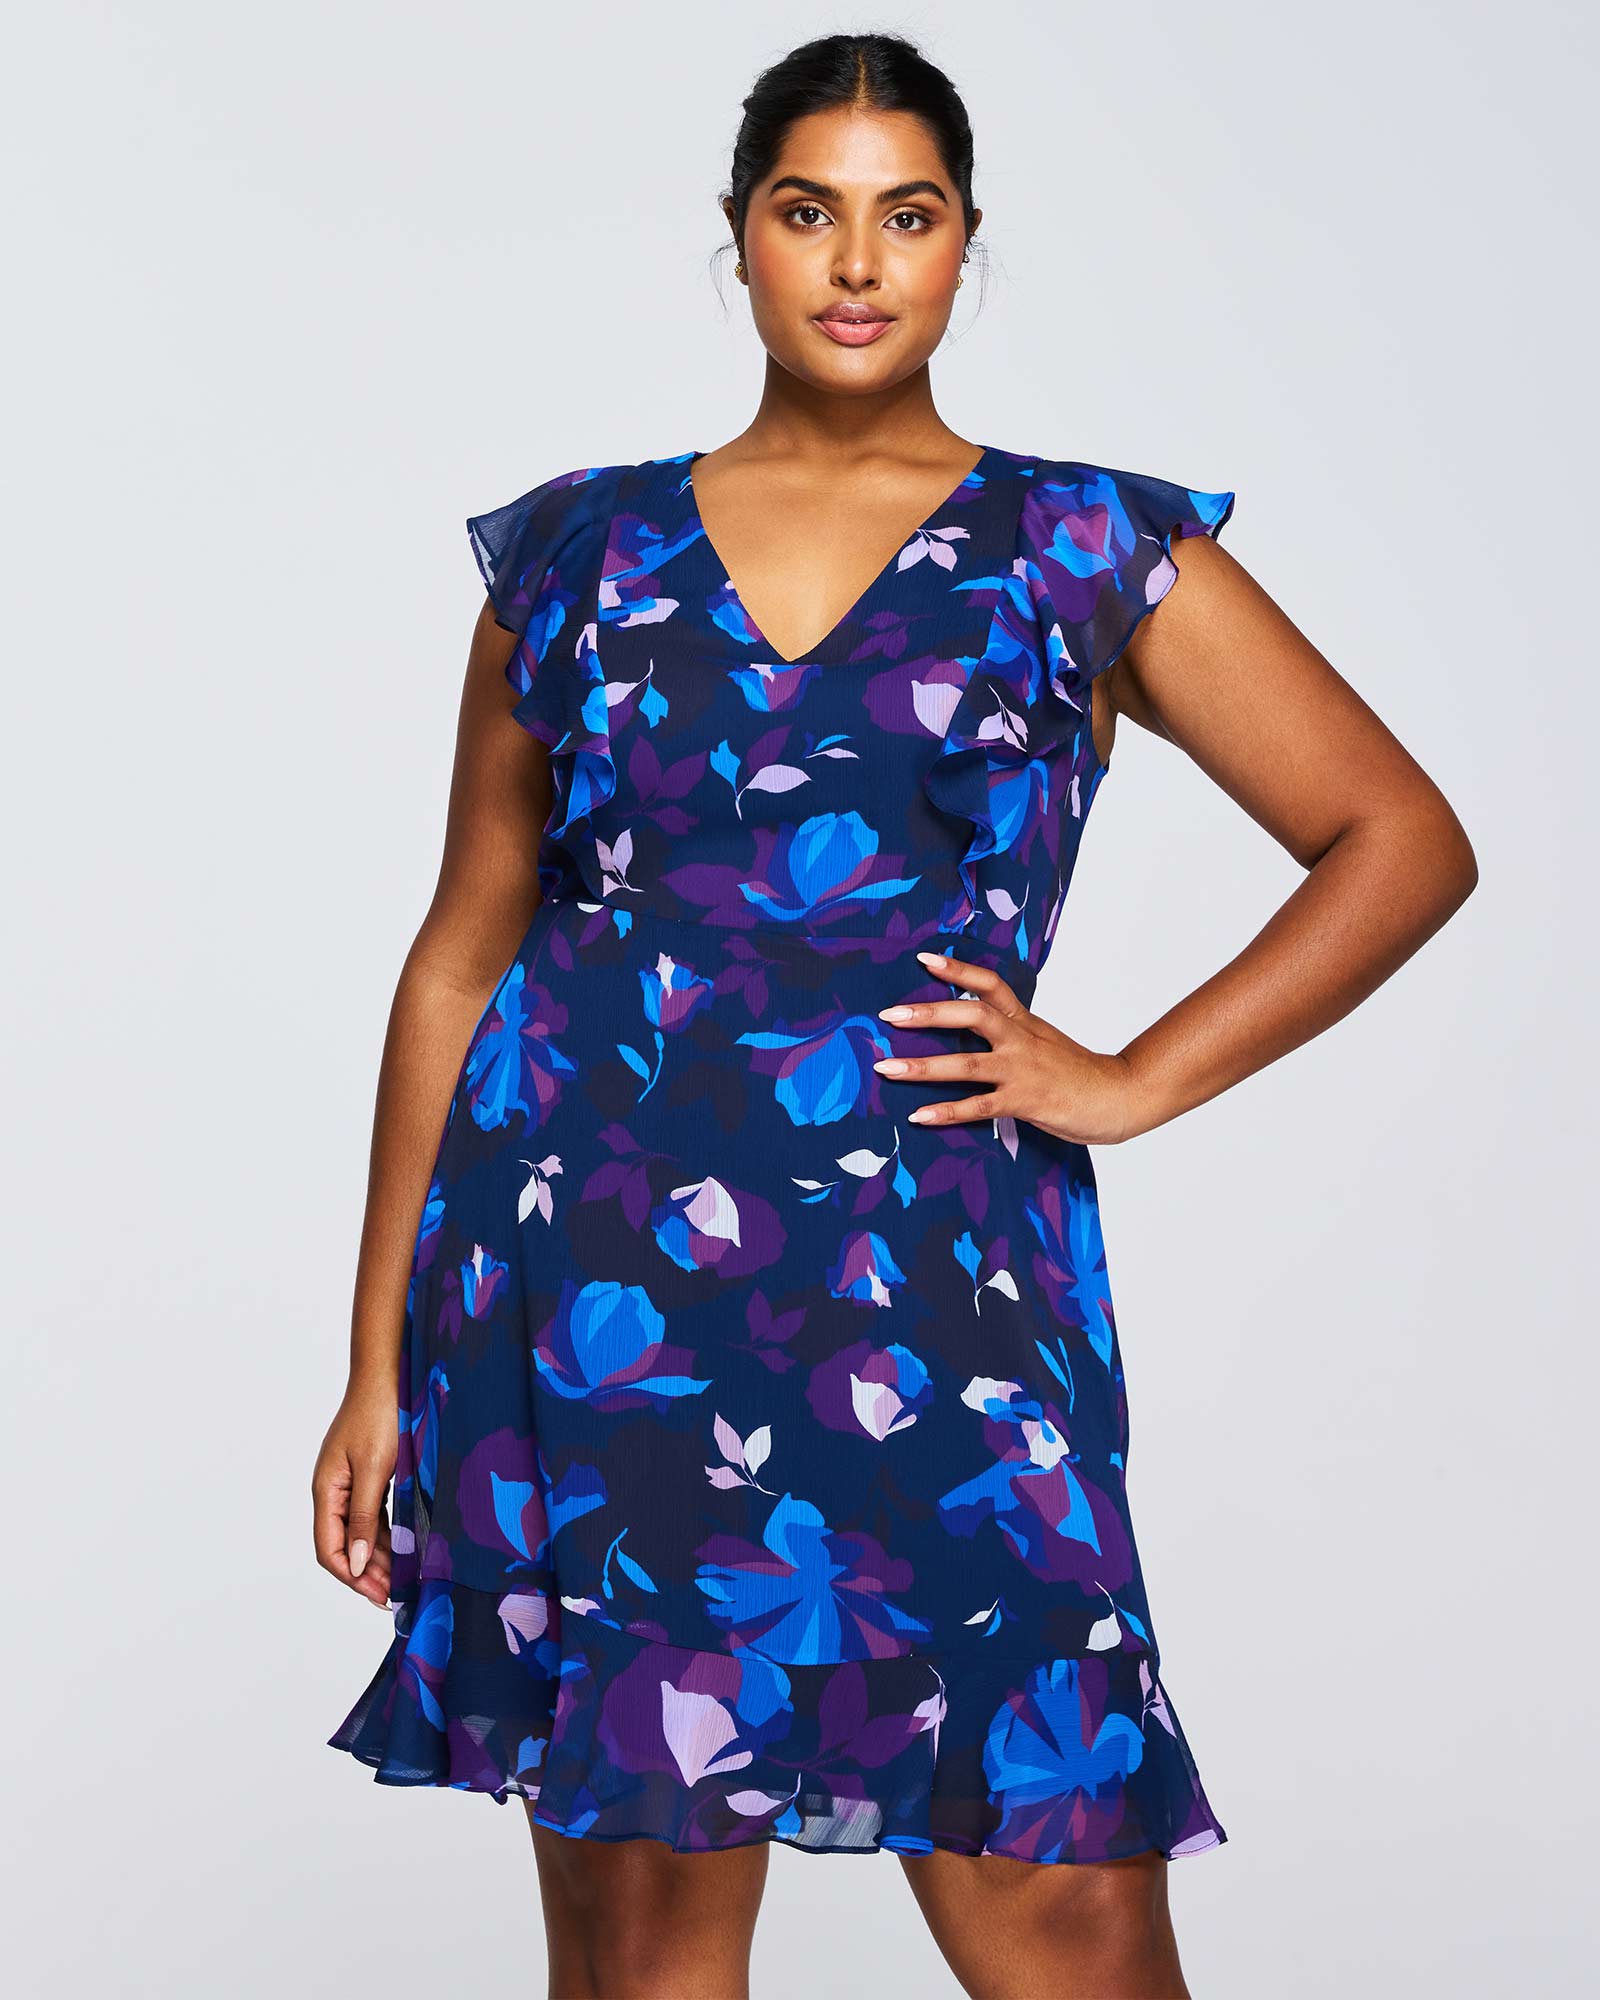 A plus size woman wearing an Estelle Midnight Blue Blossom Knee Length Dress.